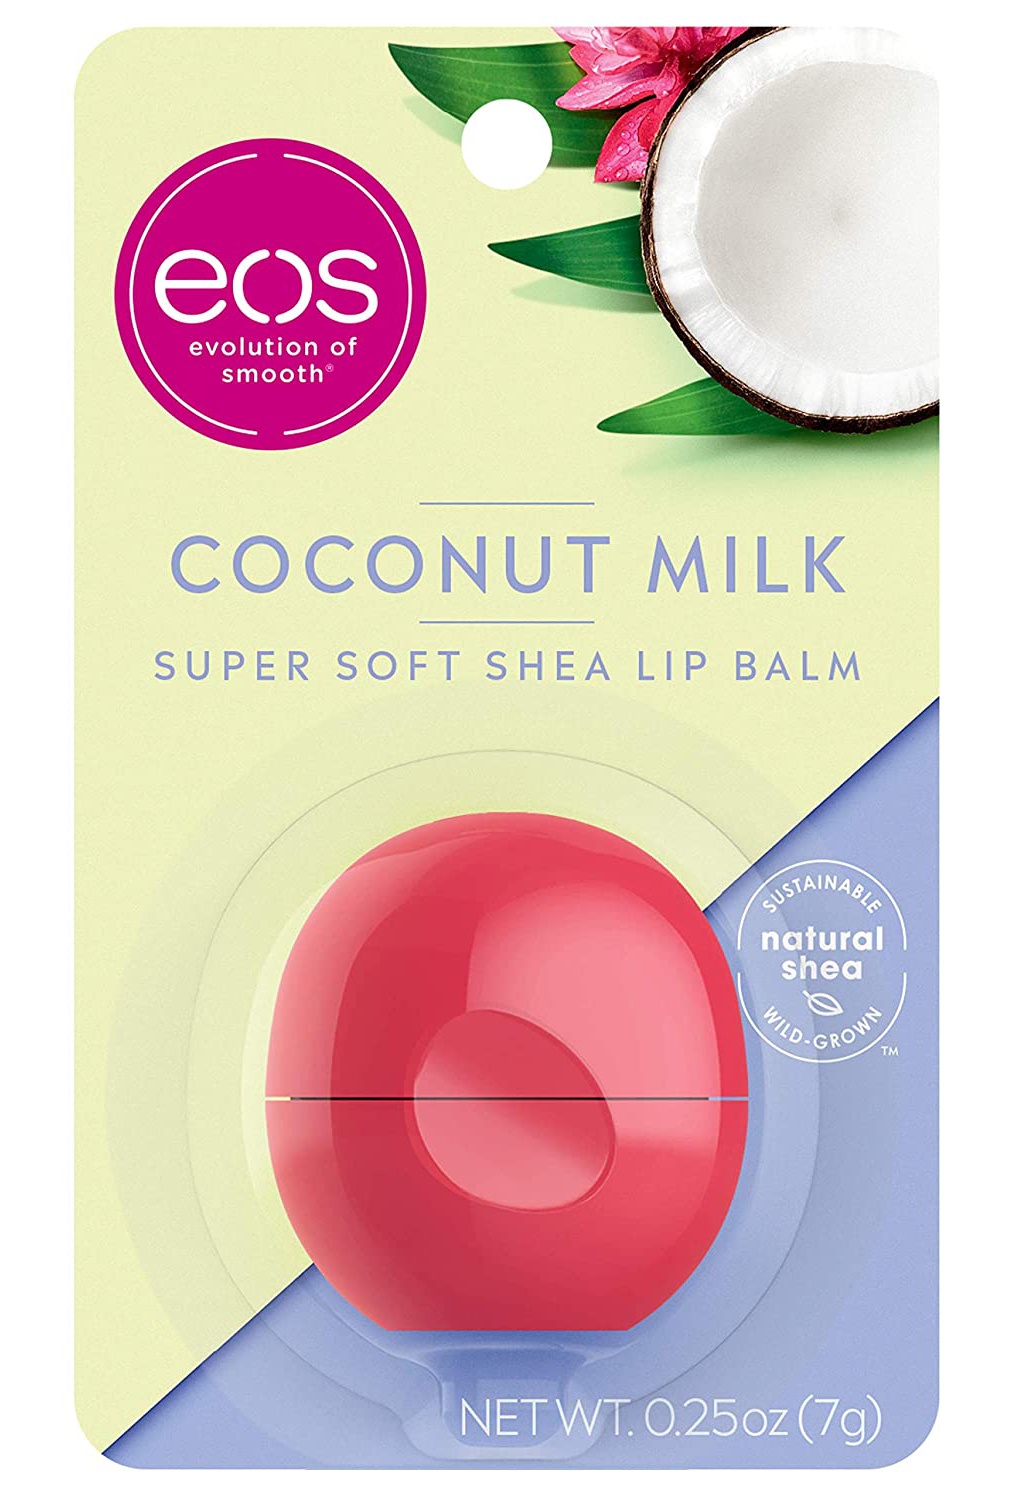 eos Coconut Milk Super Soft Shea Balm